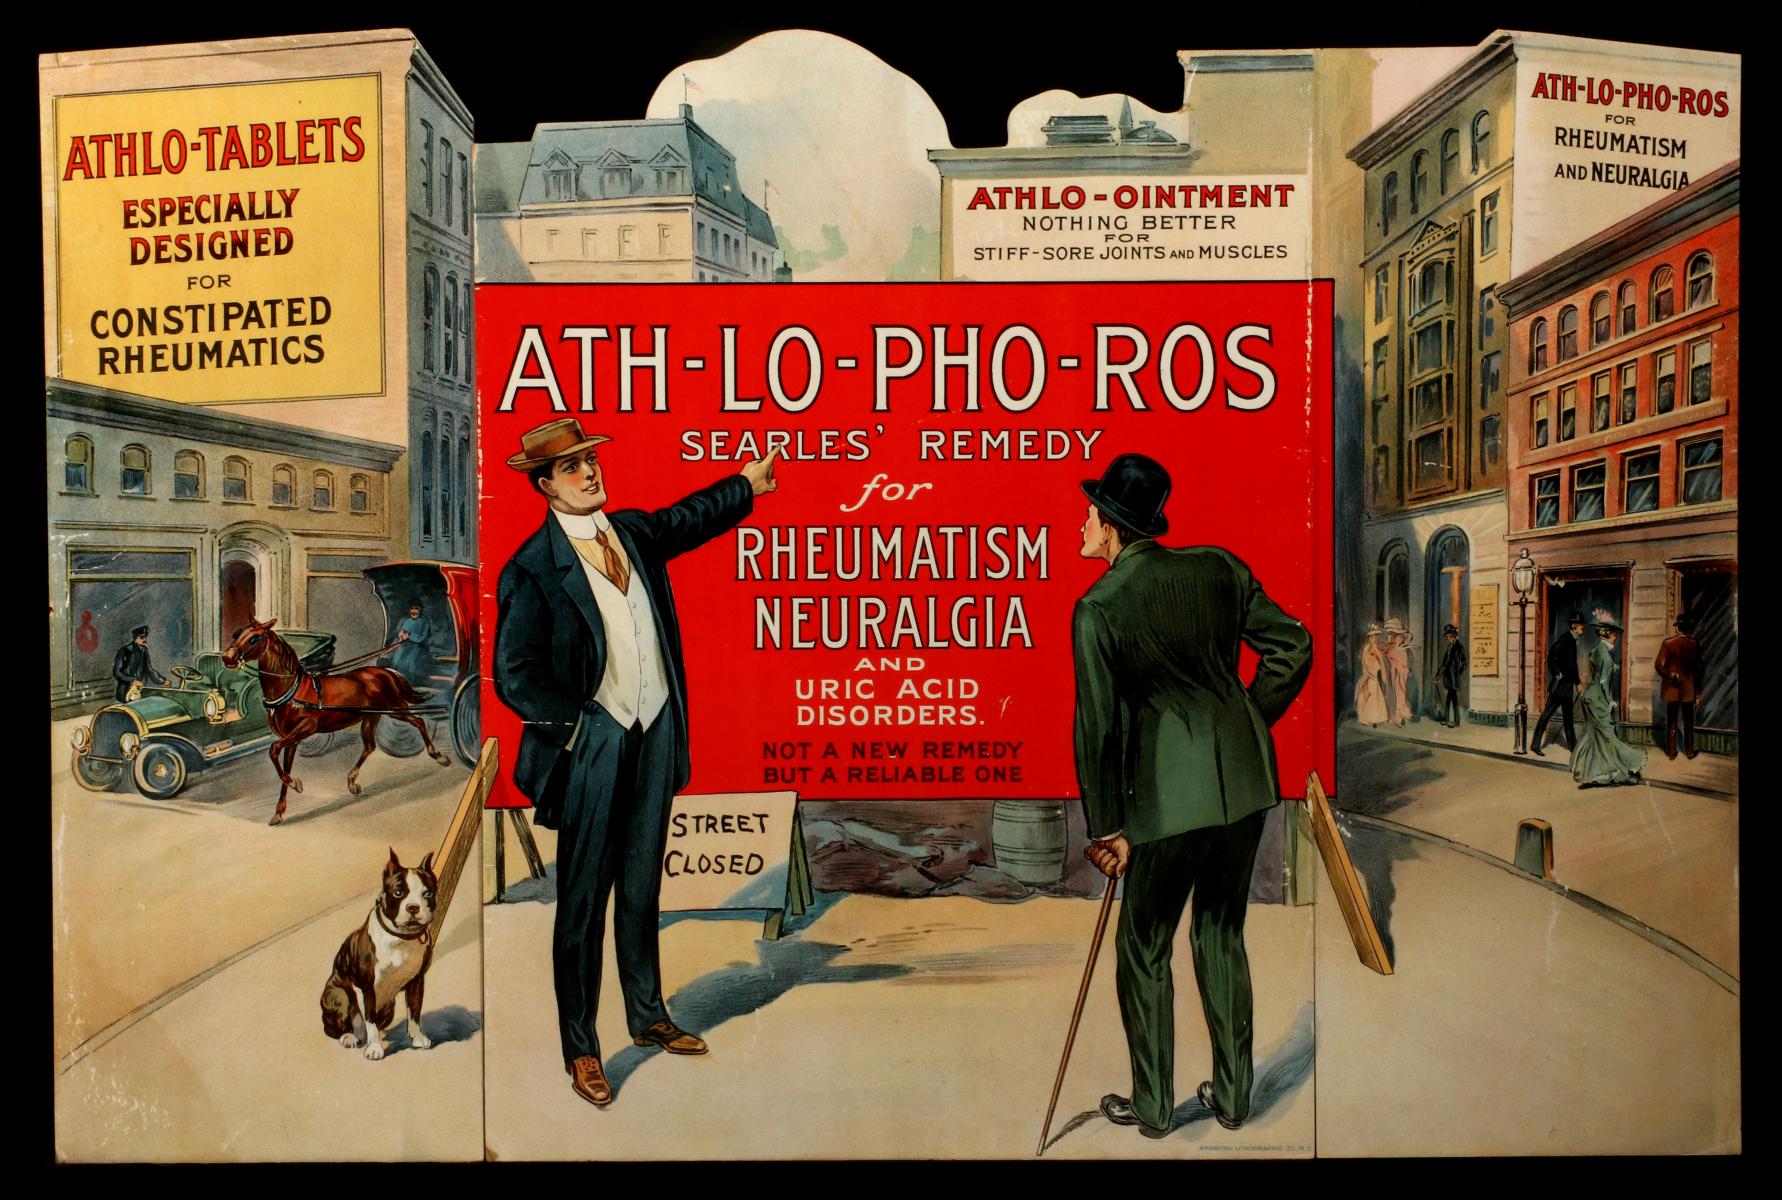 'ATH-LO-PHO-ROS' BRAND PATENT MEDICINE ADVERTISING